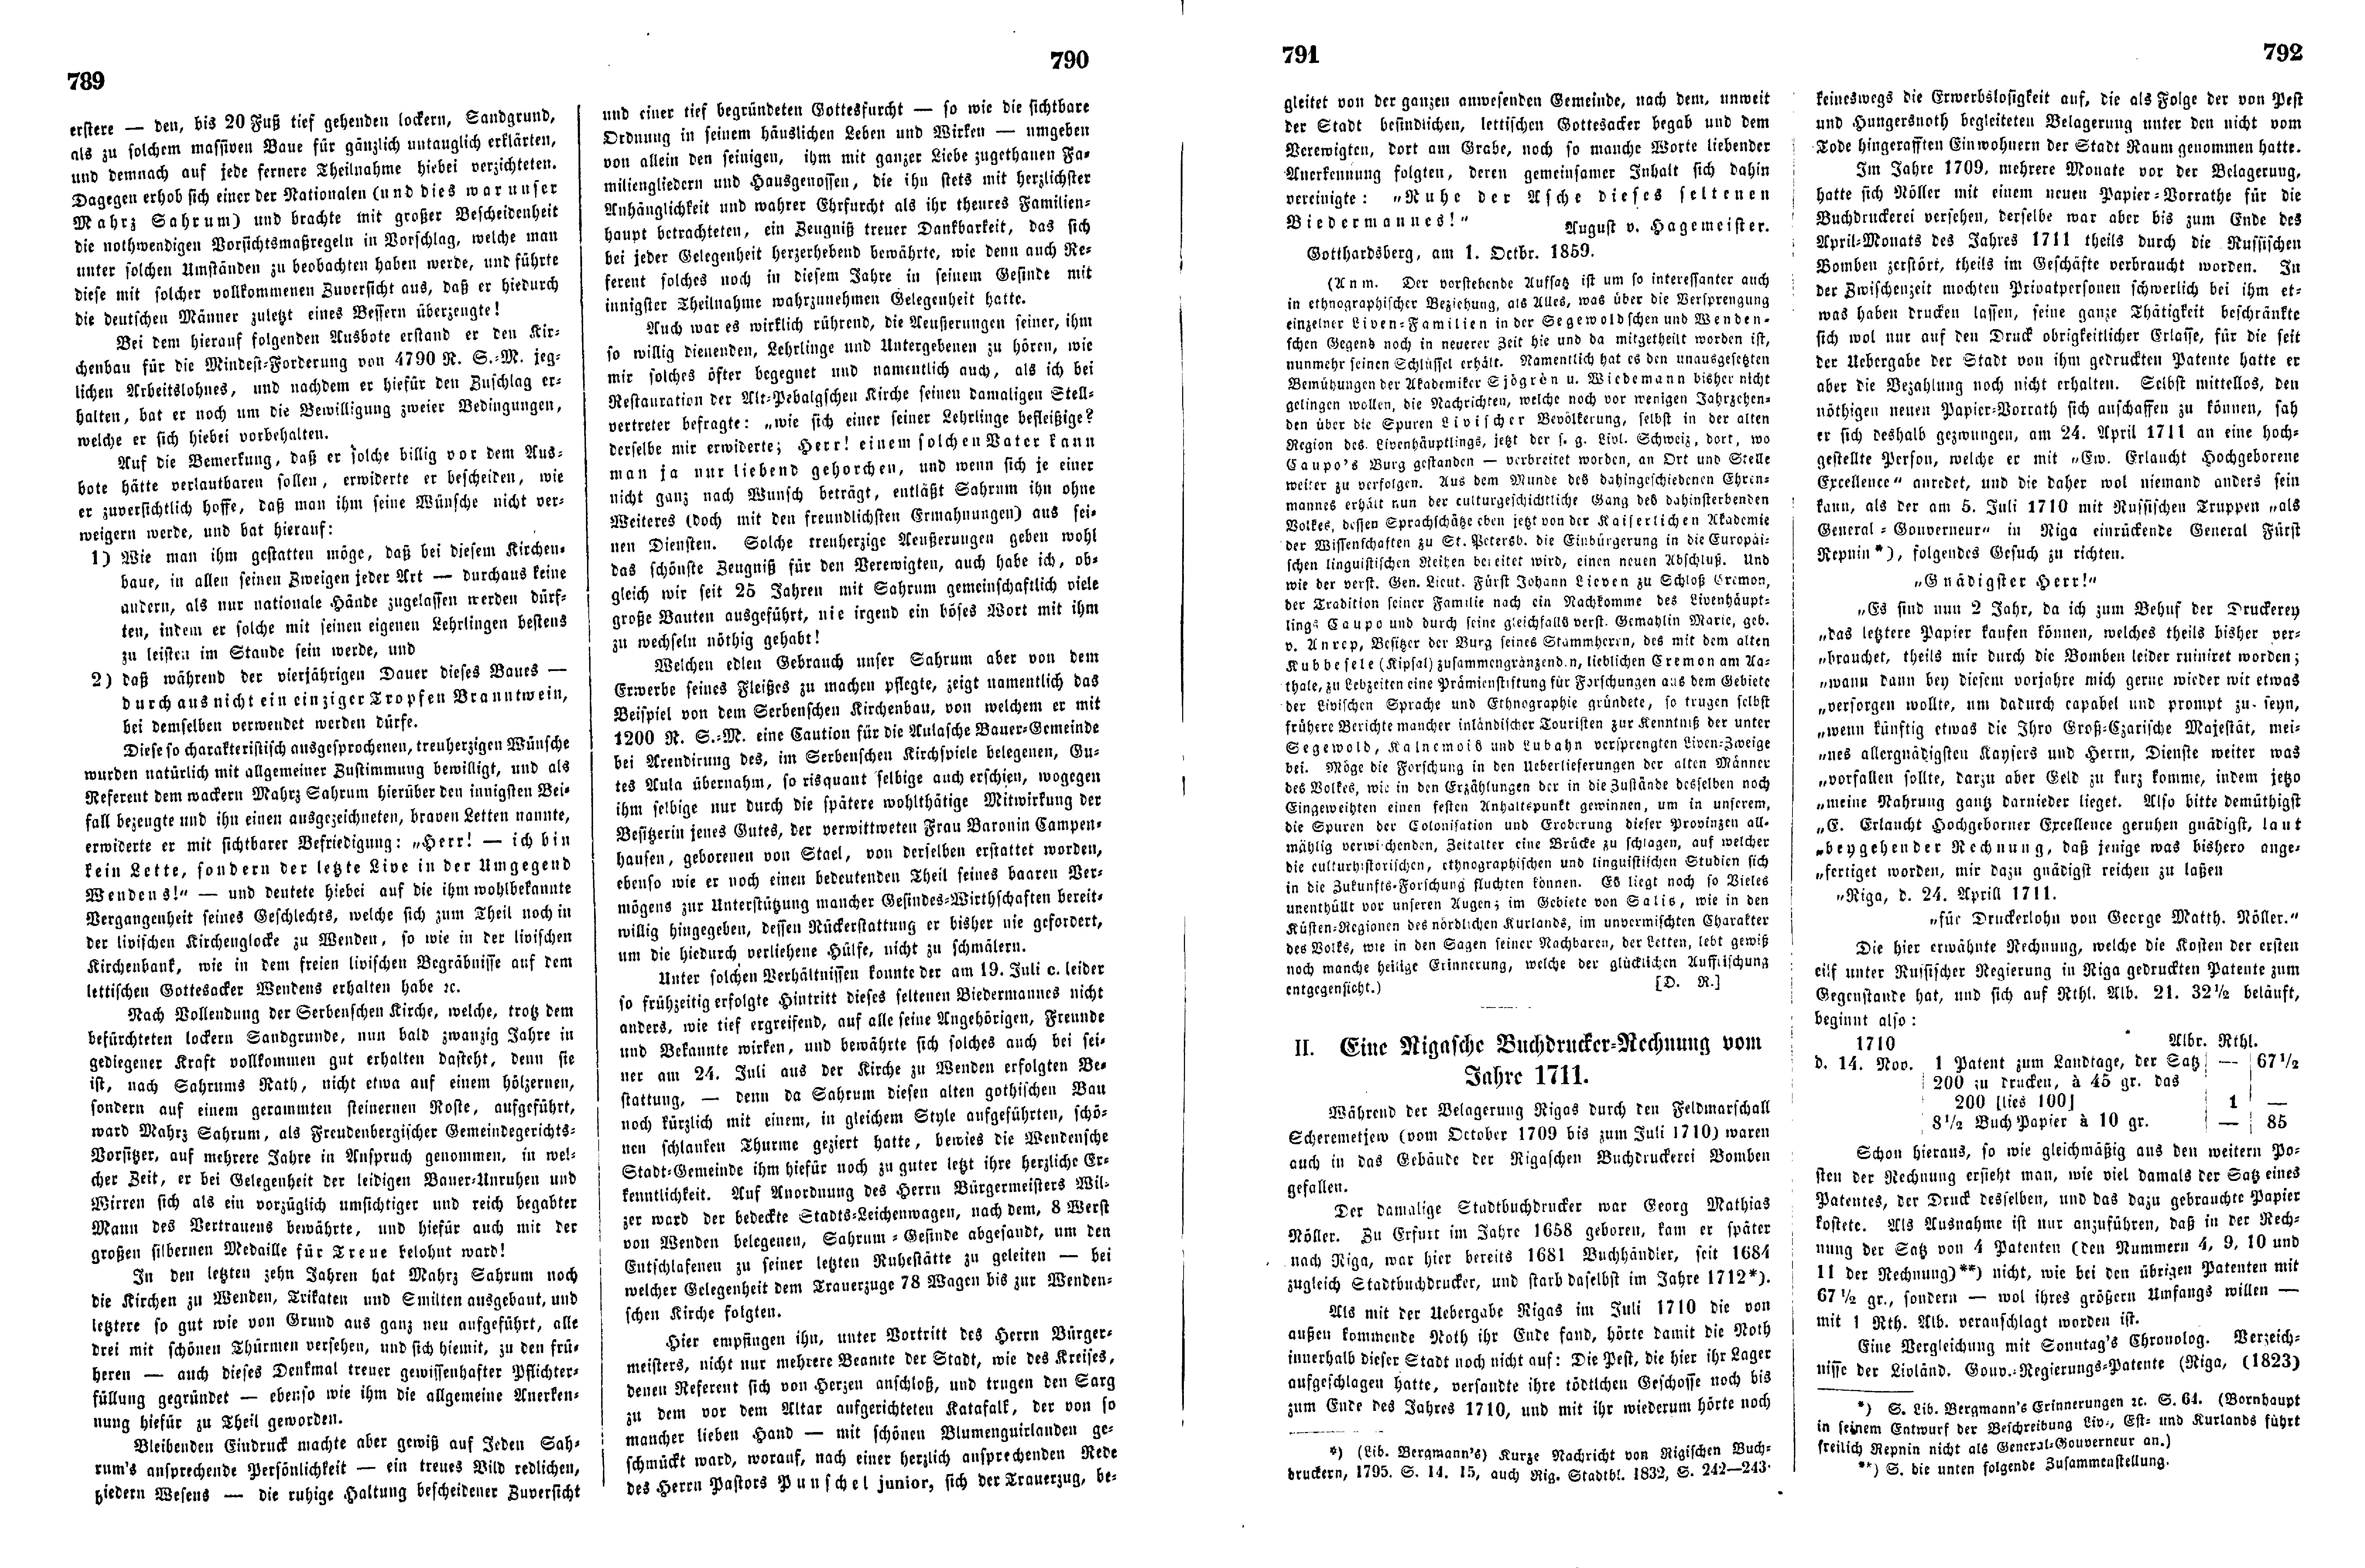 Das Inland [24] (1859) | 208. (789-792) Main body of text